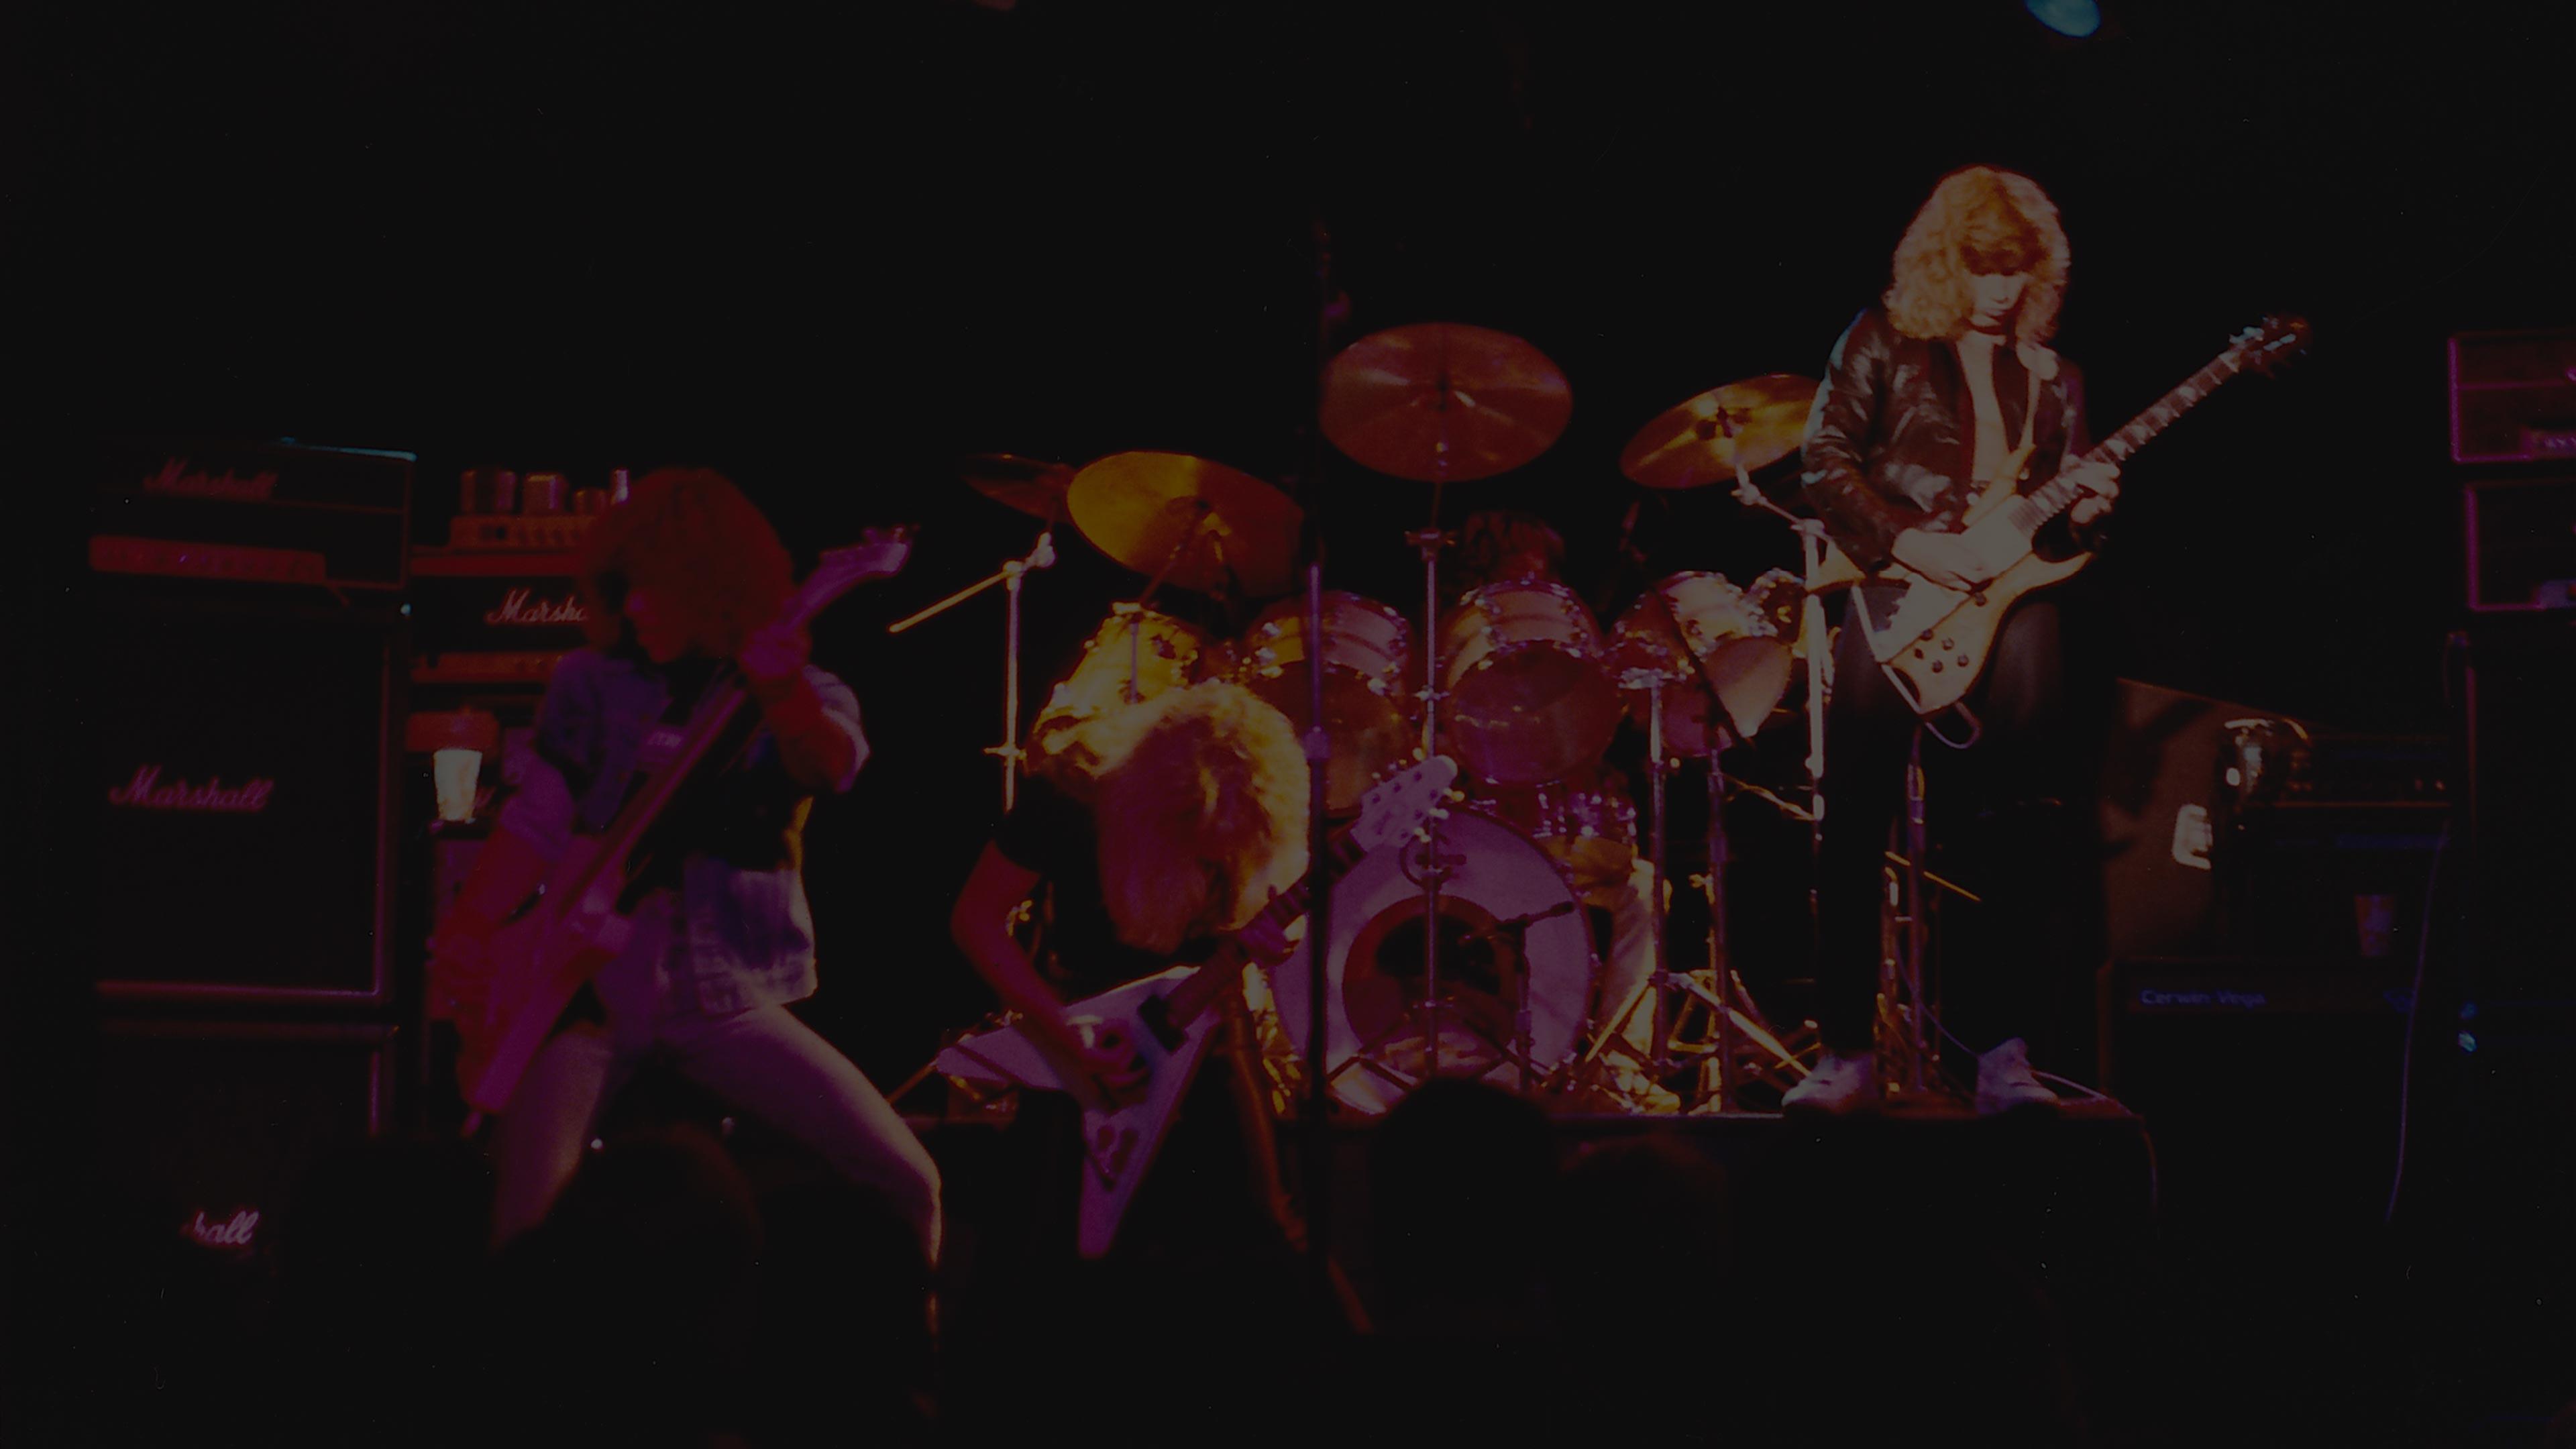 Metallica at Billy Barty’s Roller Fantasy in Fullerton, CA on October 23, 1982